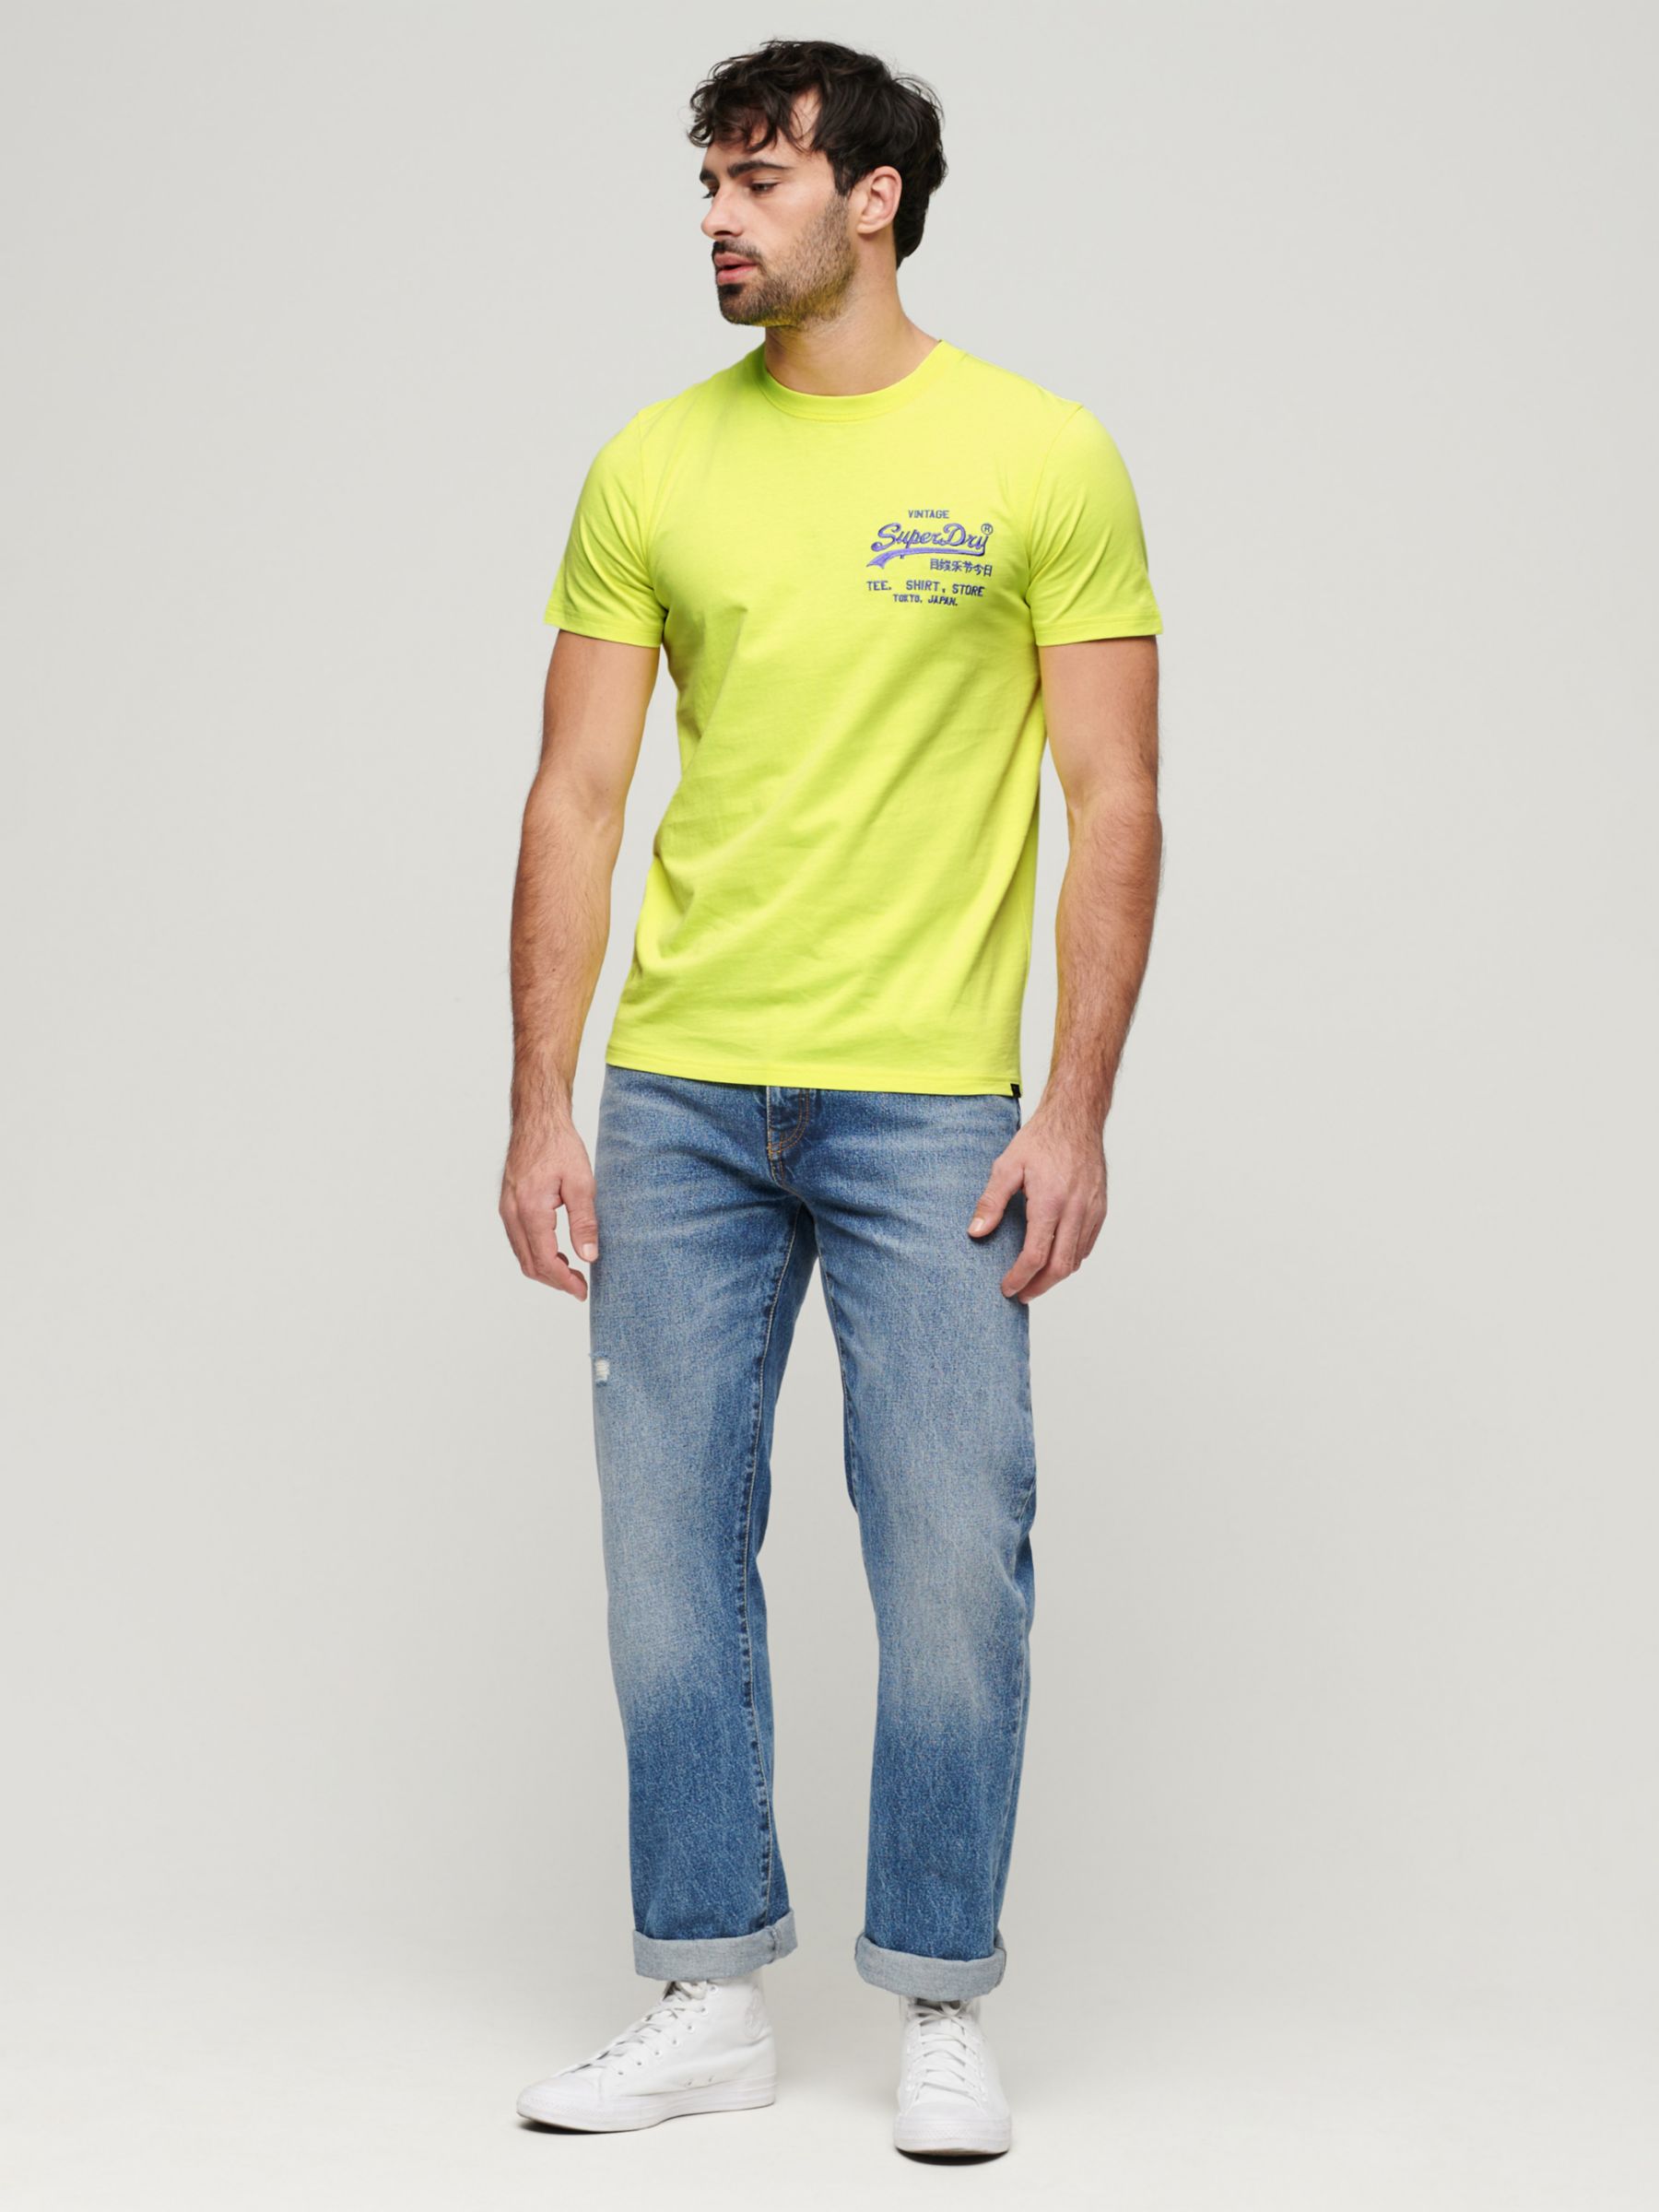 Superdry Neon Vintage Logo T-Shirt, Neon Yellow, XXXL